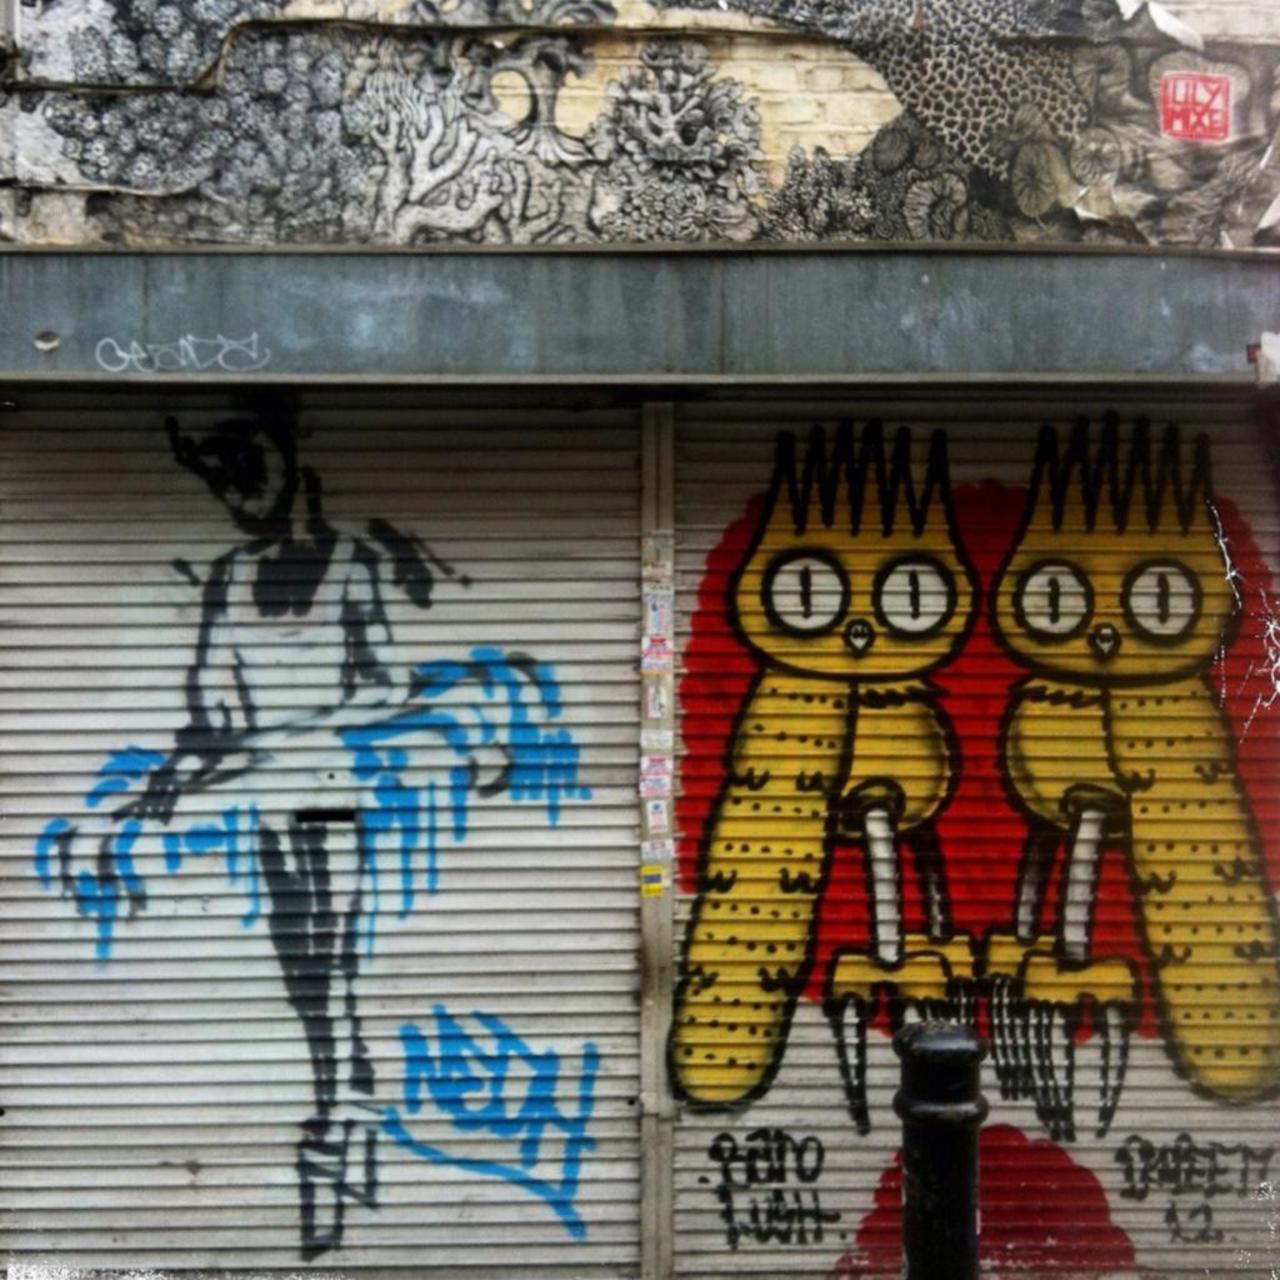 Trio of works on Hanbury Street from #NeohLondon #Dscreet and @lilymixe 

#art #streetart #graffiti http://t.co/2H9IoRBEFs